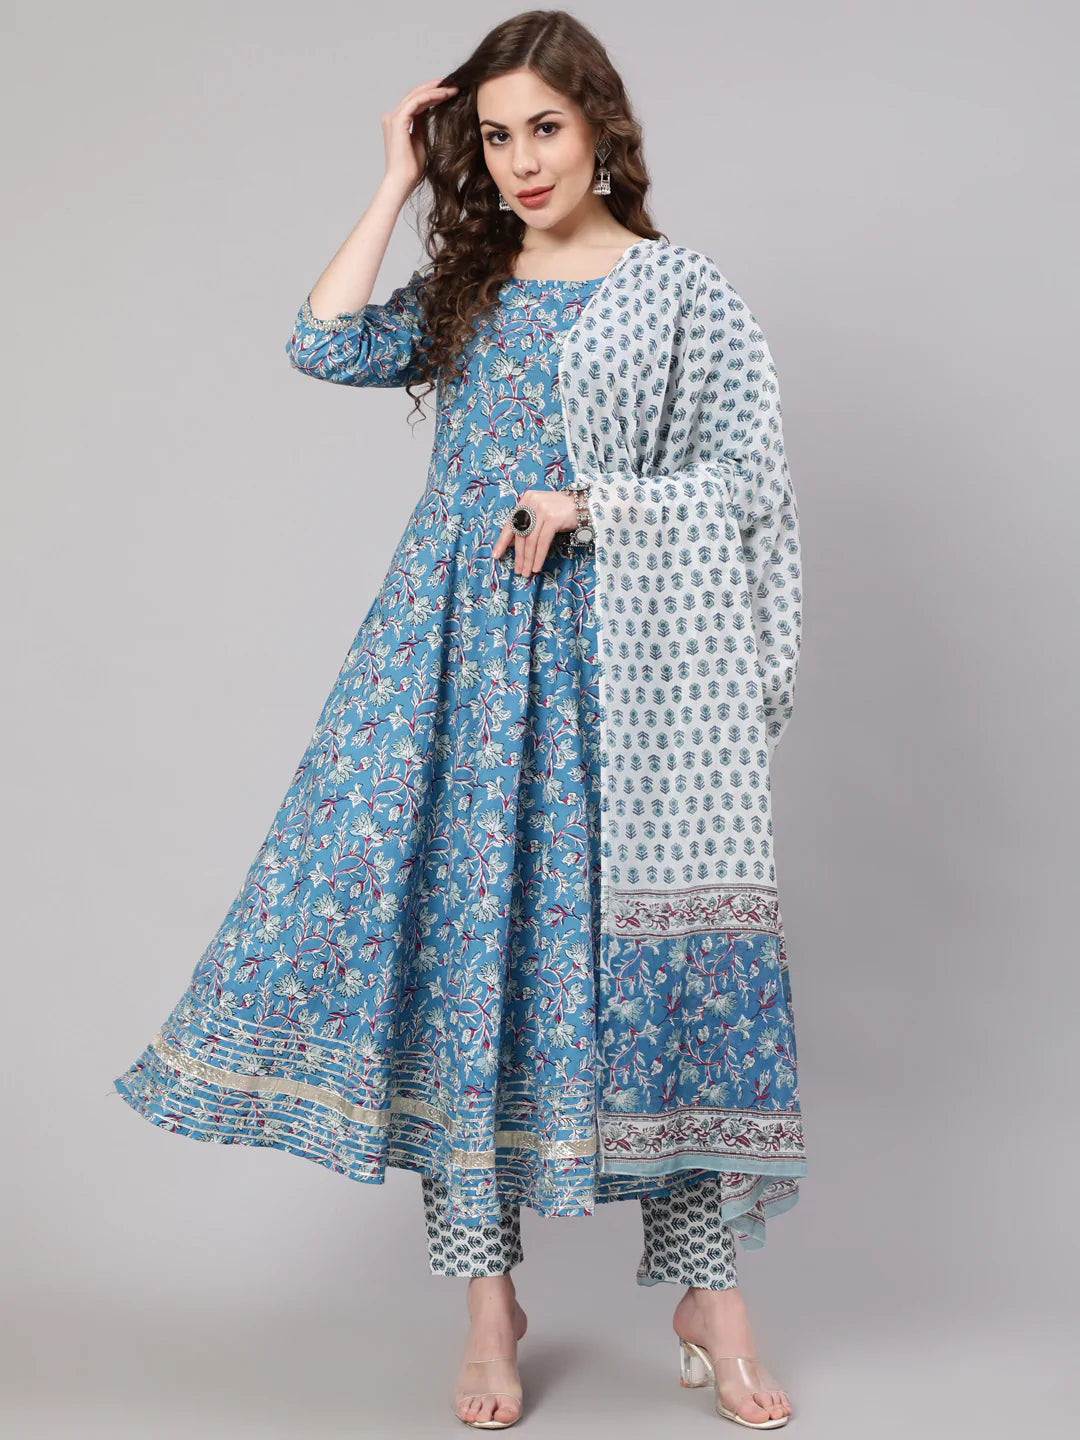 Buy Nayo Women Multi Printed Anarkali Kurti Online at 60% off. |Paytm Mall